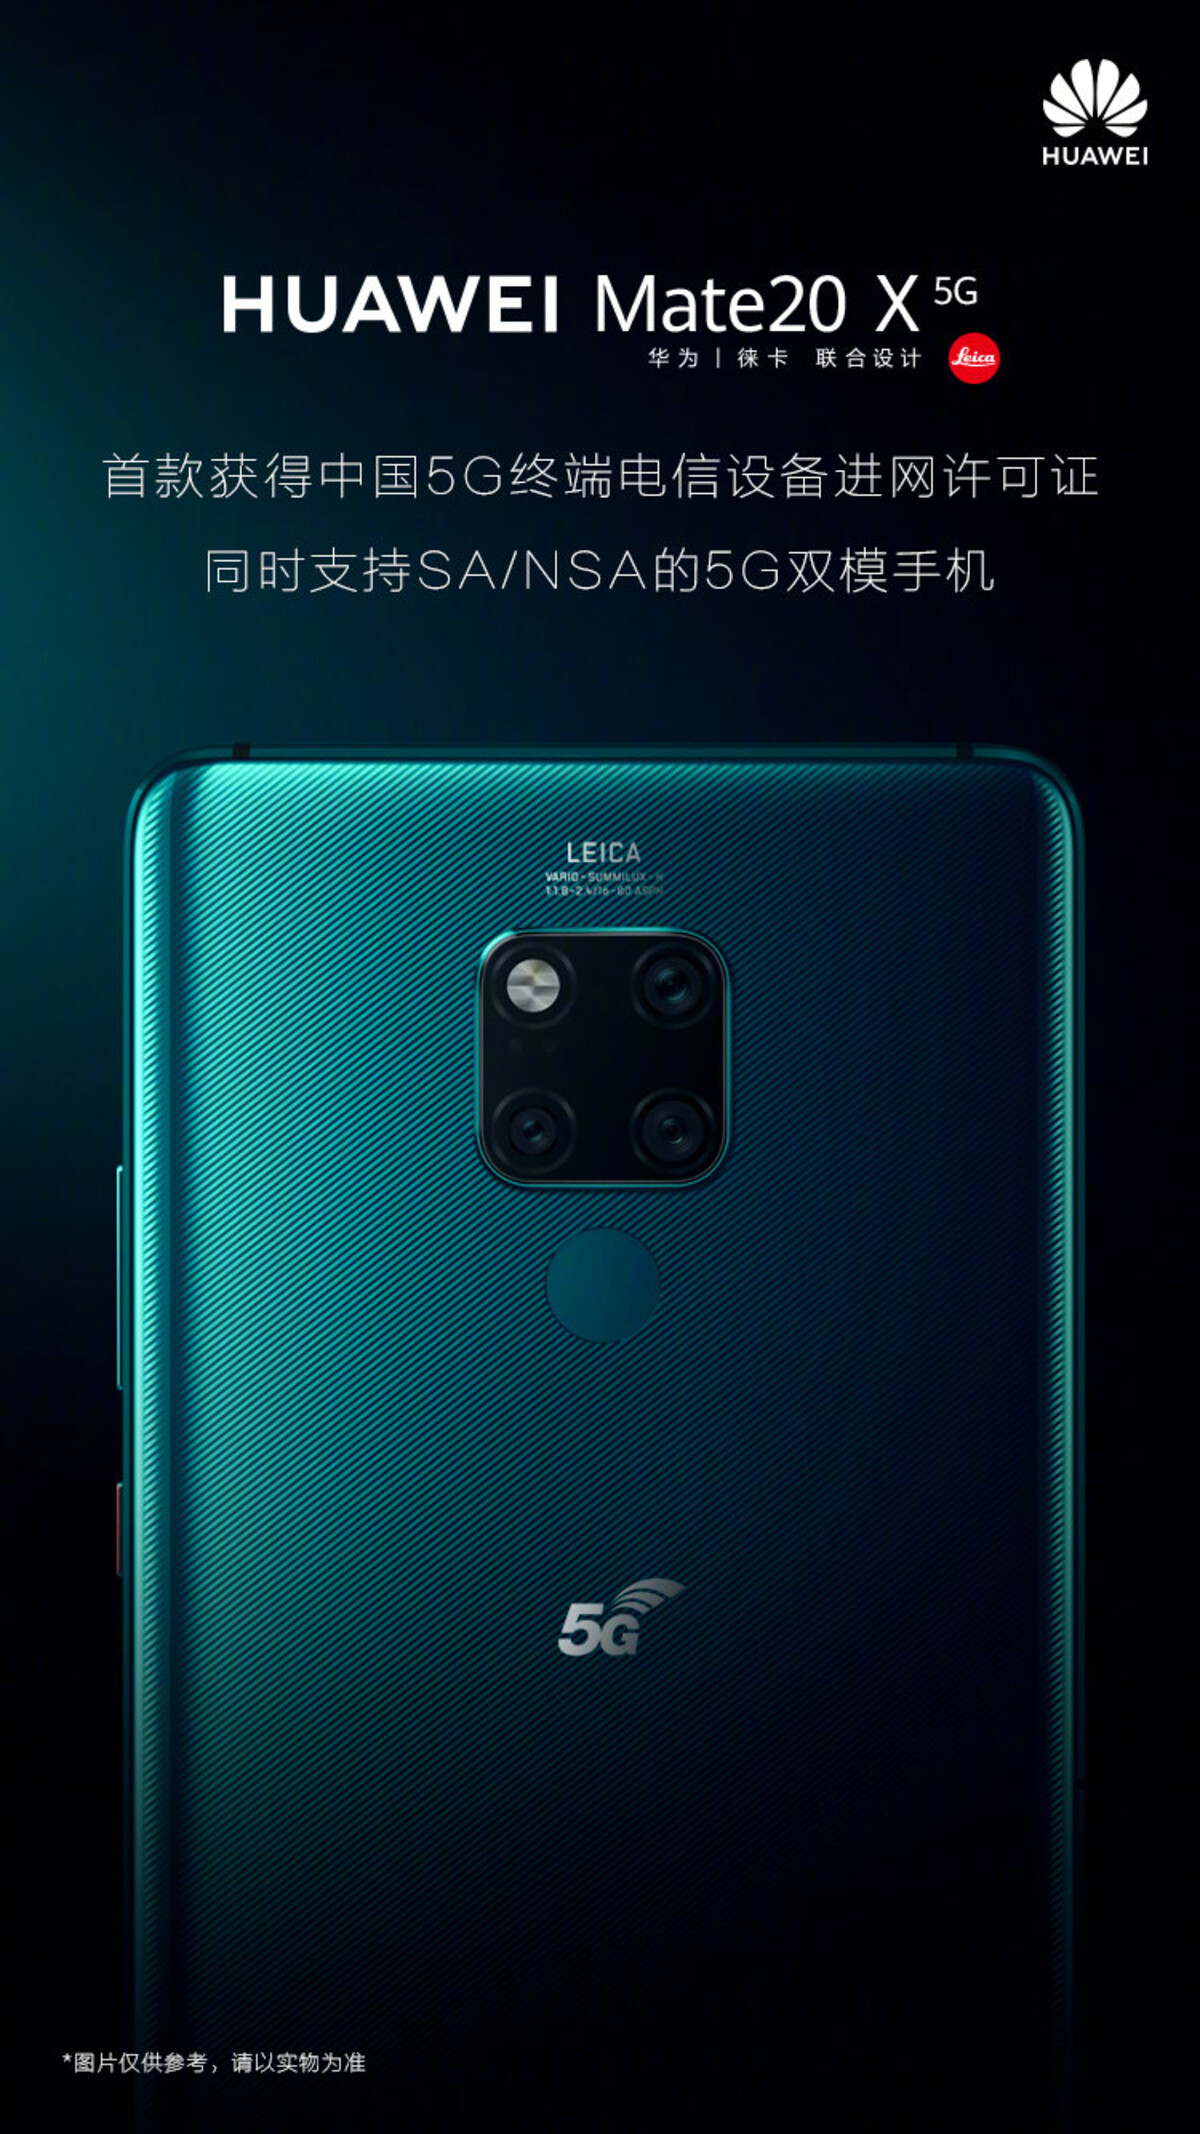 Huawei Mate 20 X 5G devine primul dispozitiv care primeste licenta de acces la reteaua de telecomunicatii 5G din China - GNU/Linux